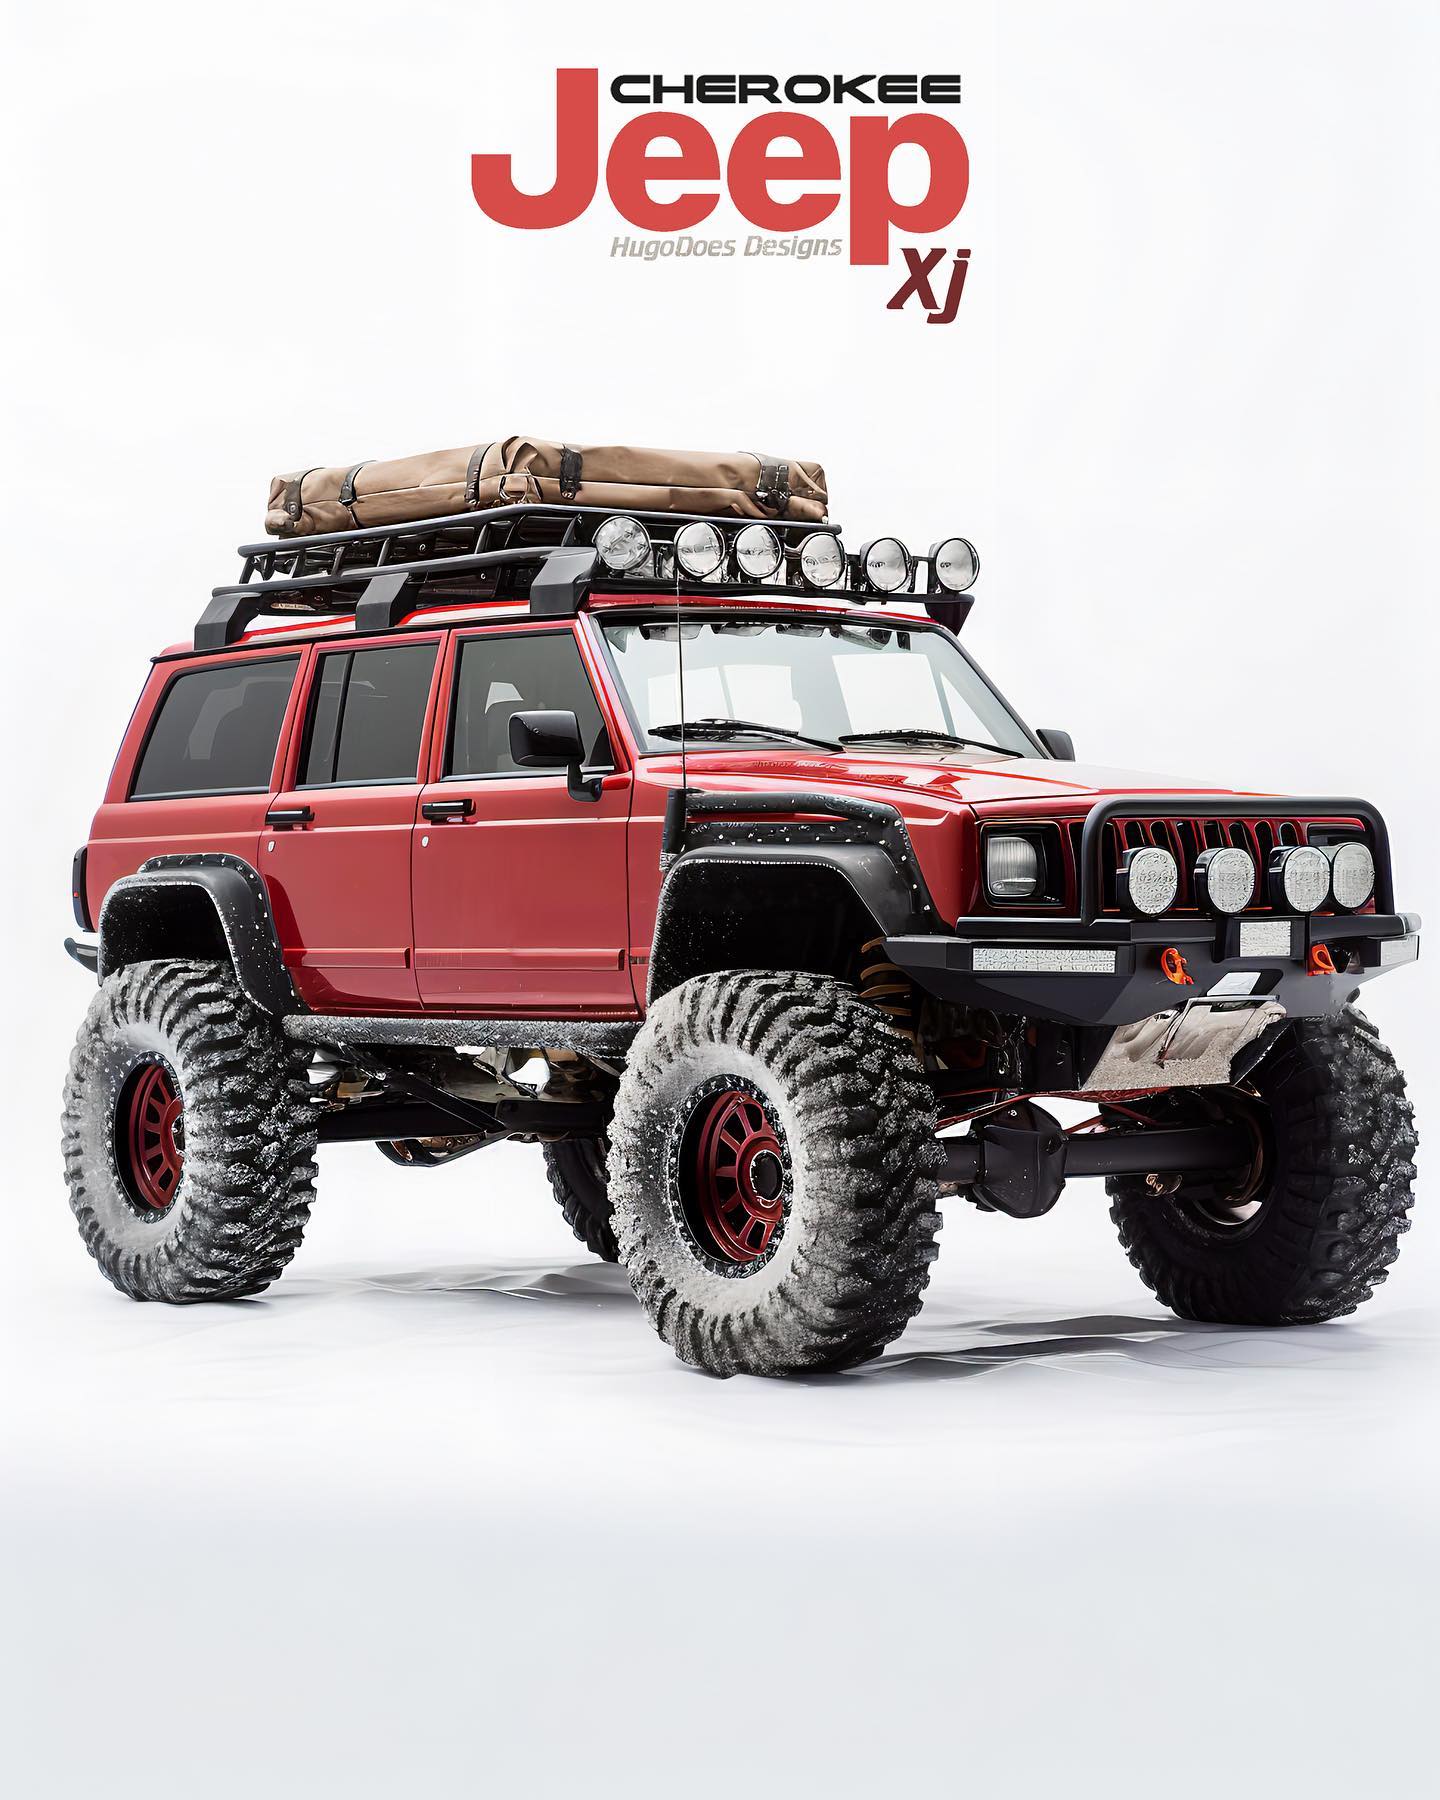 Jeep Cherokee XJ overland render on 37 inch mud tires